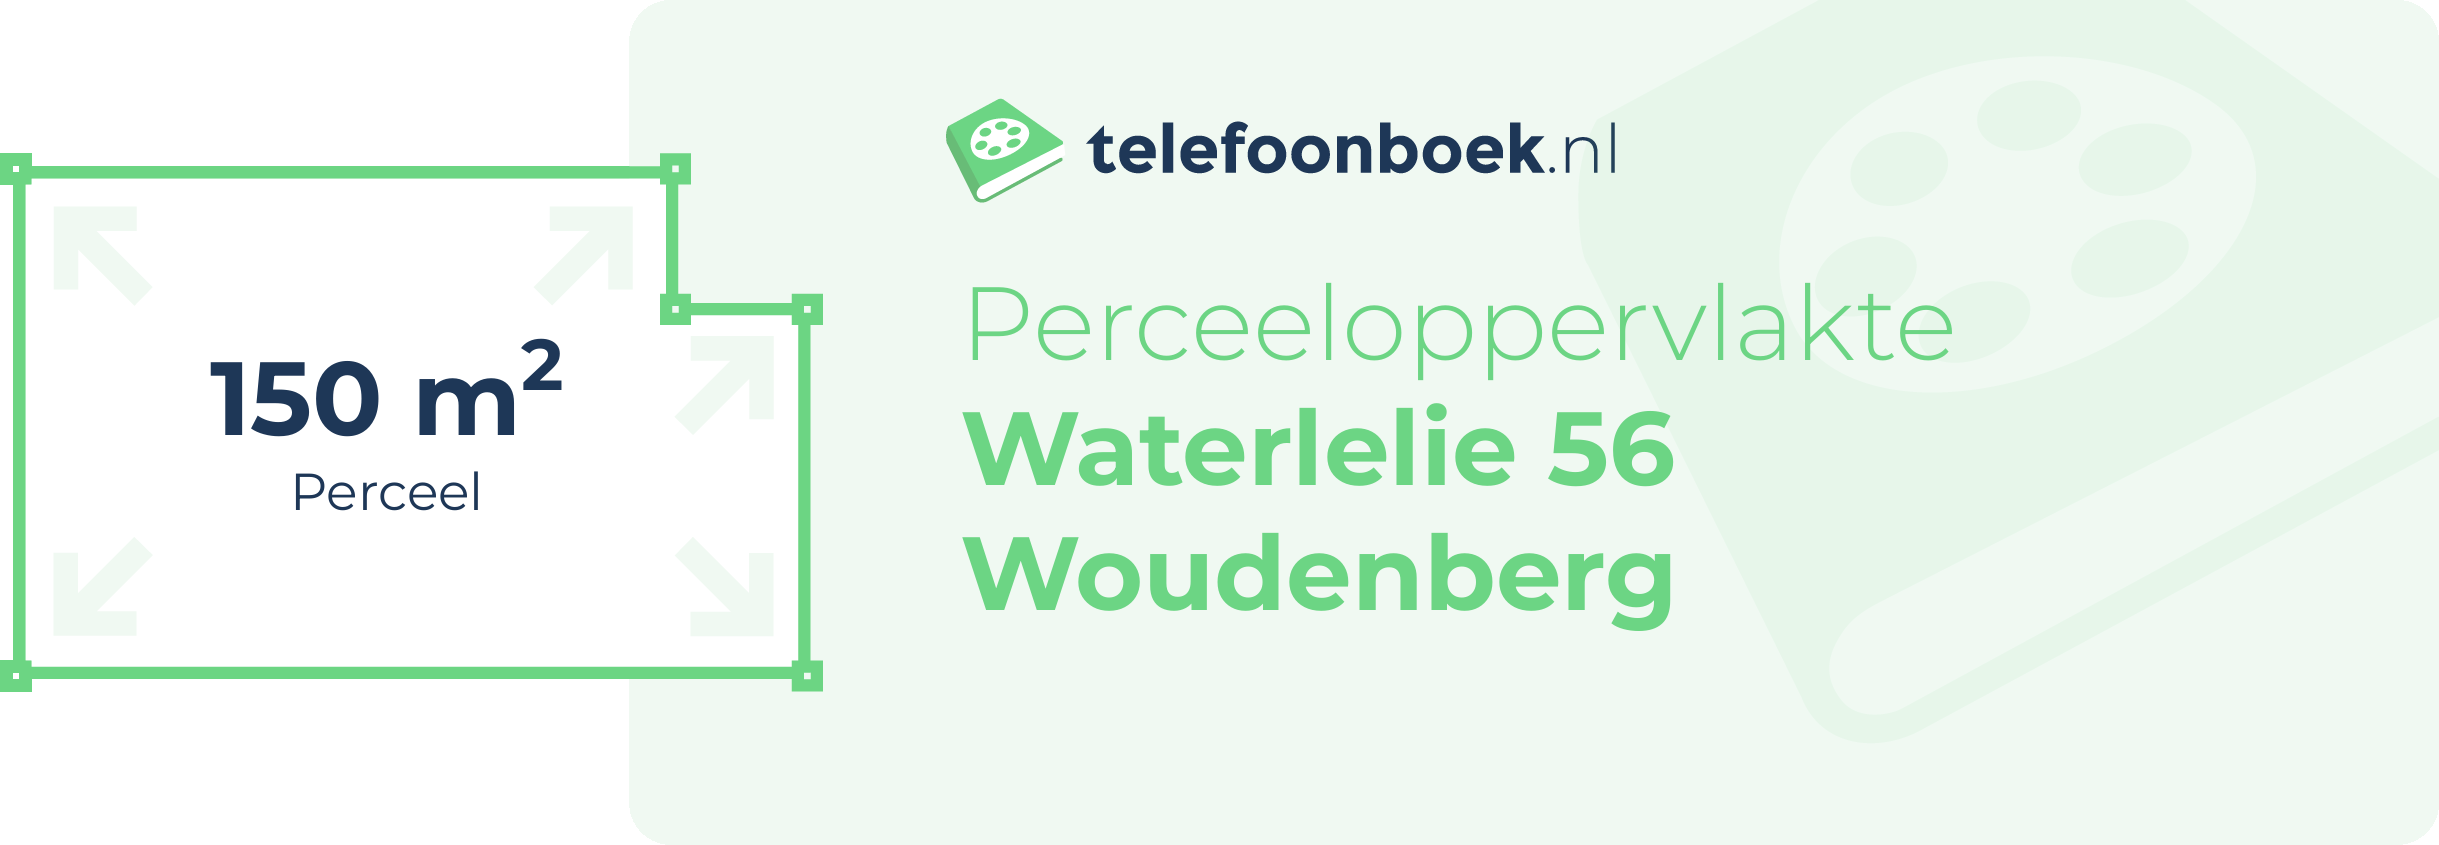 Perceeloppervlakte Waterlelie 56 Woudenberg